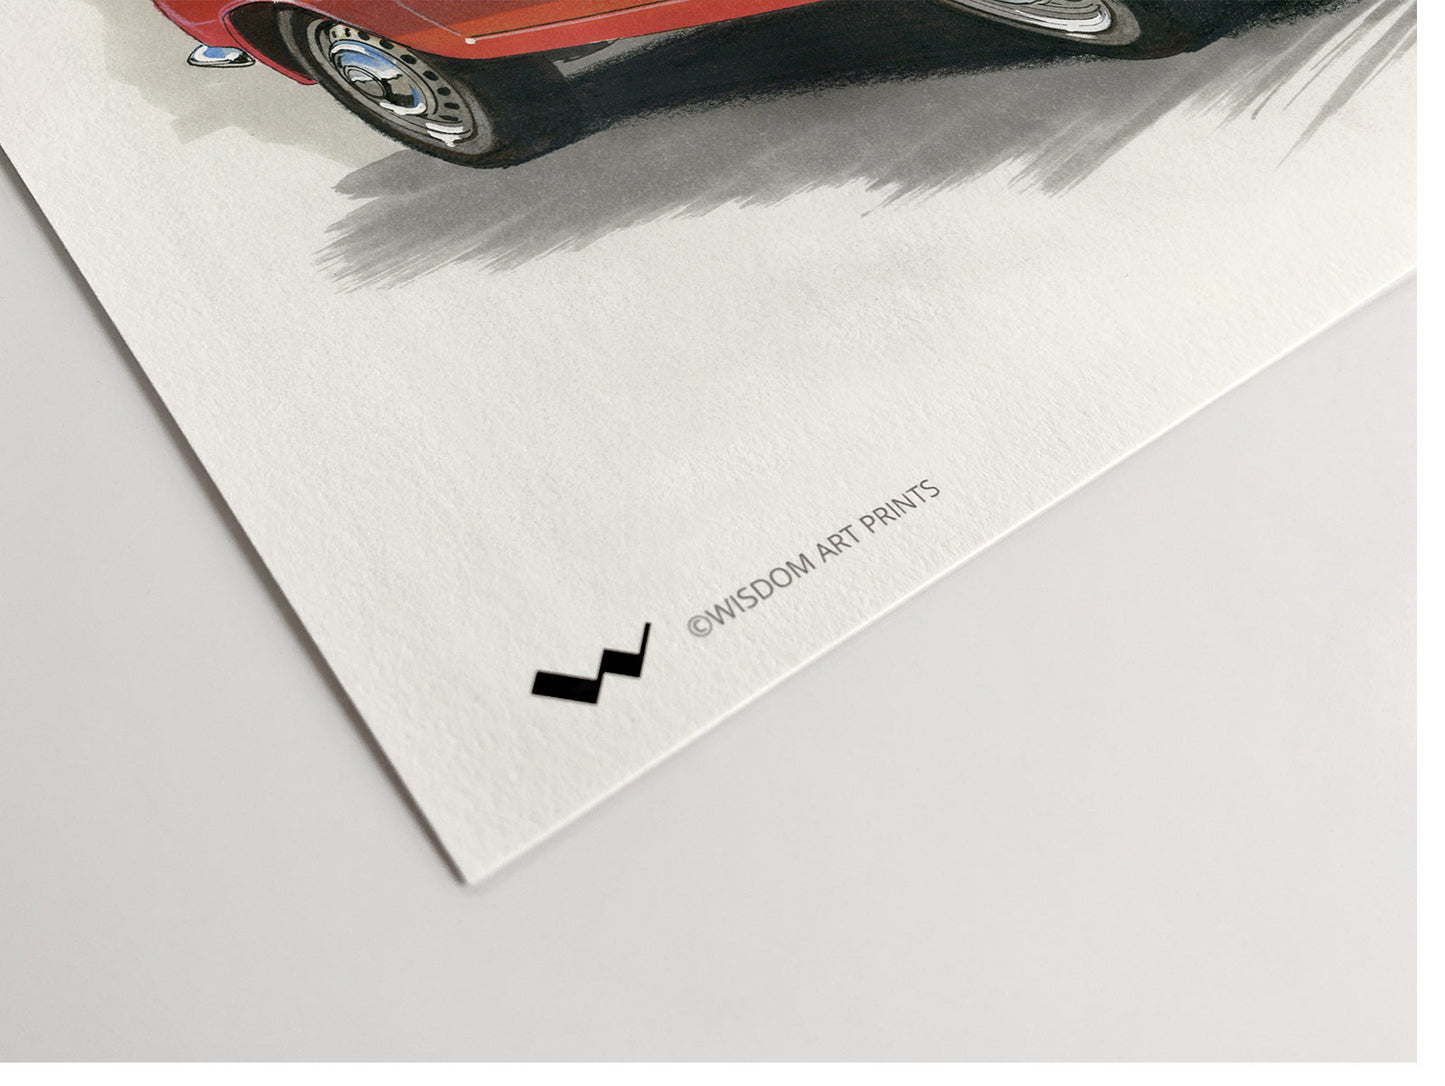 Automotive art printed on 100% cotton 308gsm textured Photorag art paper